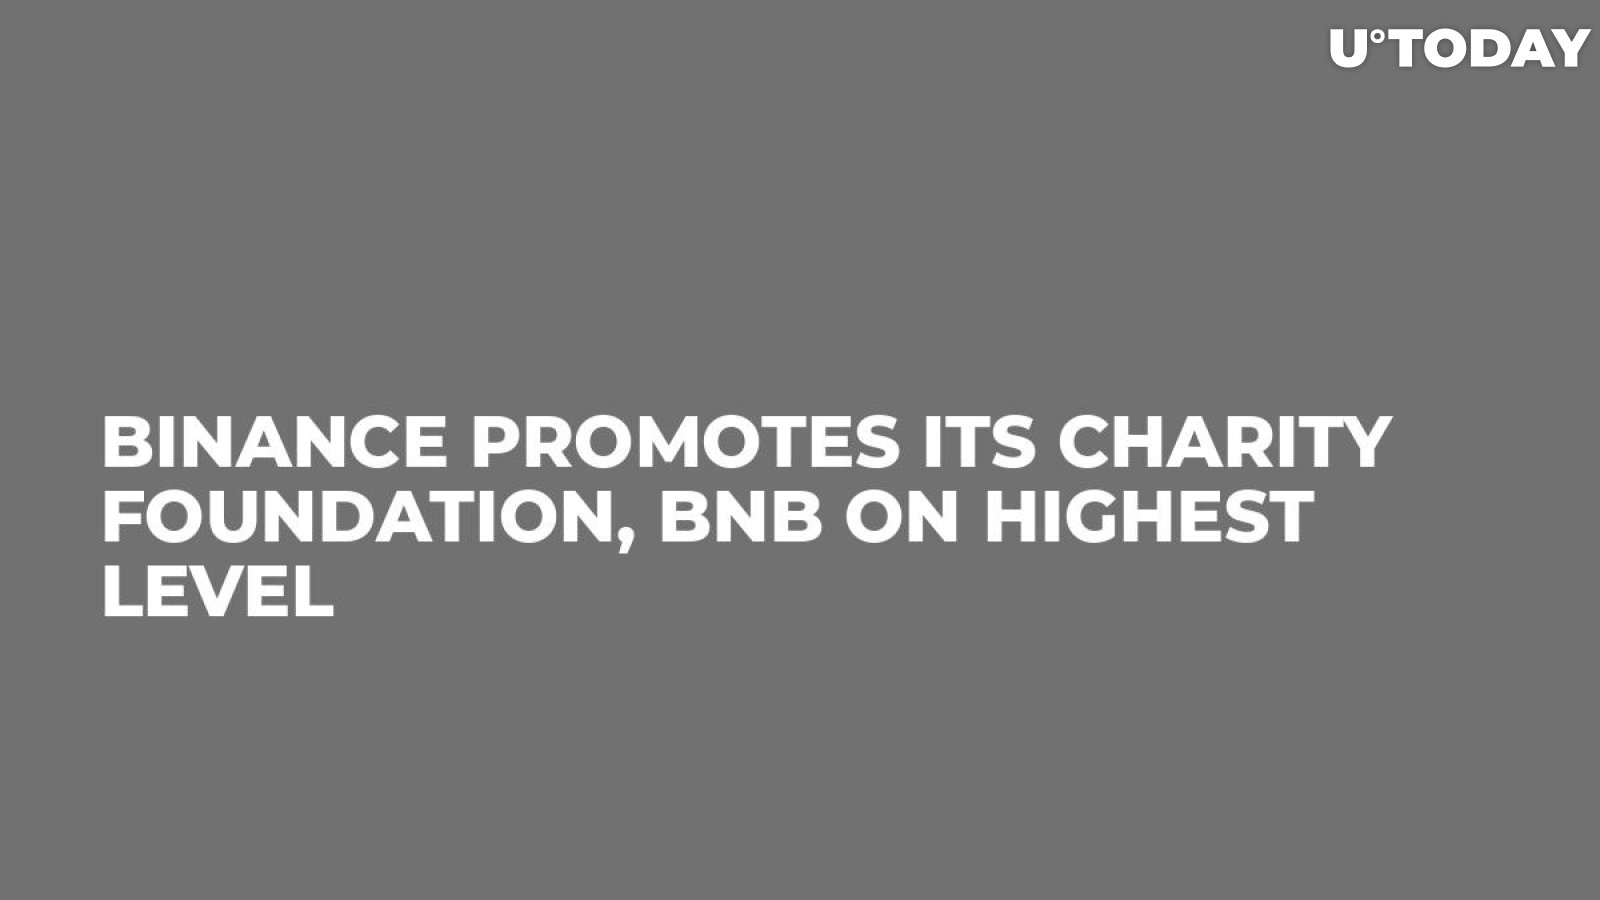 Binance Promotes Its Charity Foundation, BNB on Highest Level